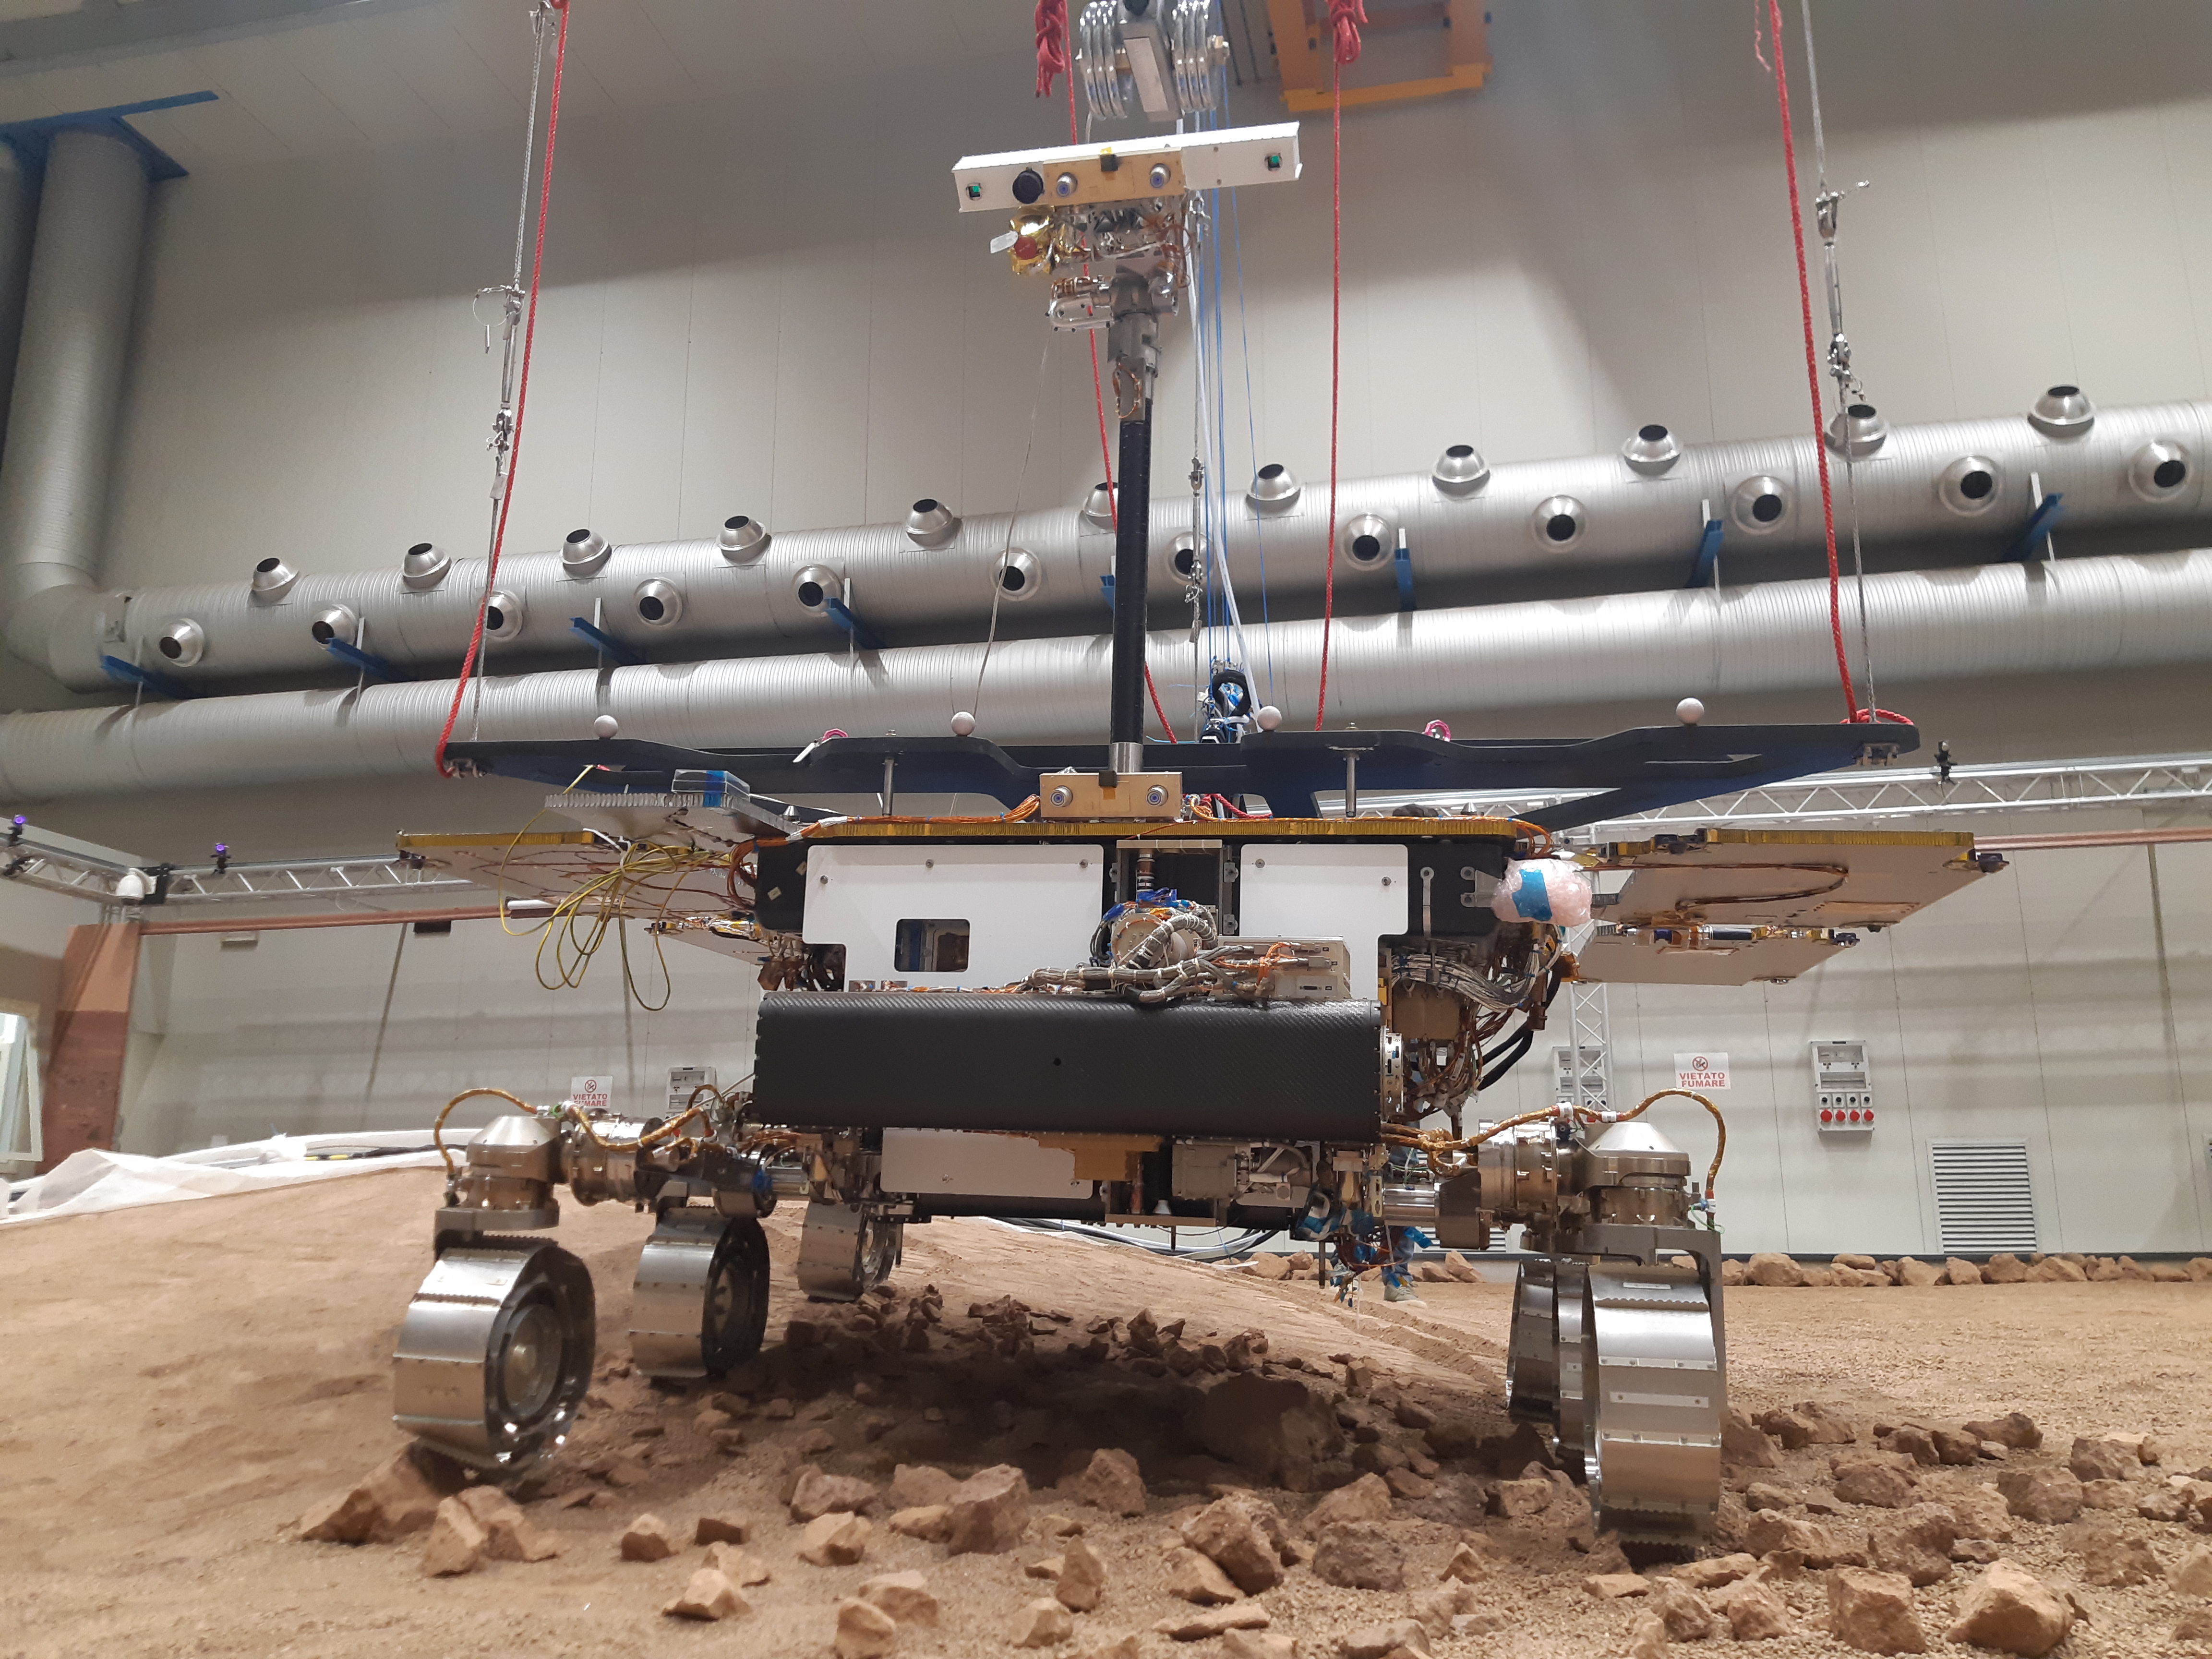 The replica ExoMars rover known as Amalia